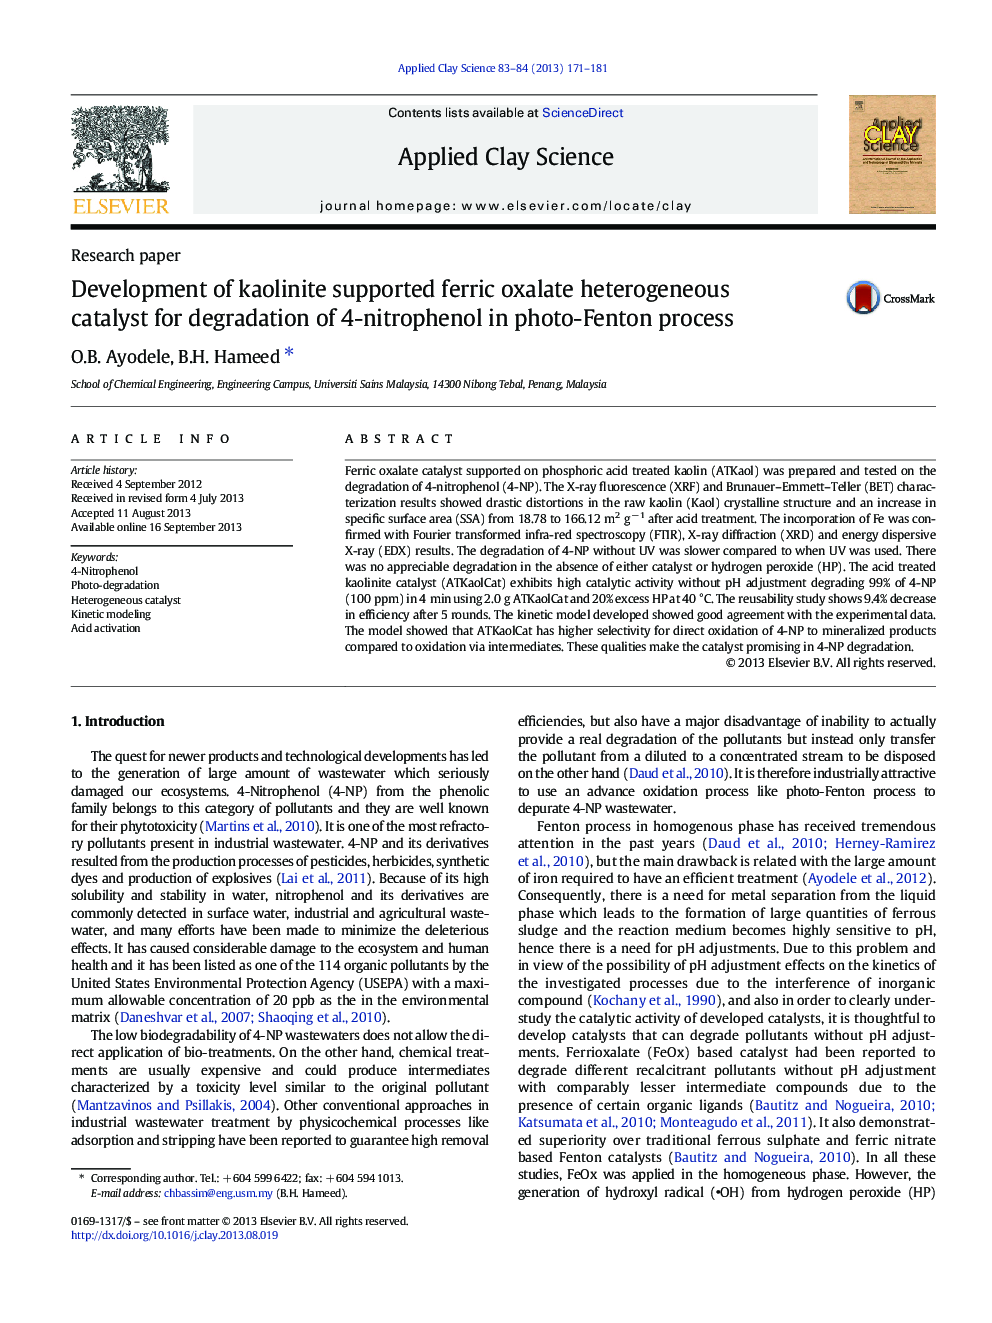 Development of kaolinite supported ferric oxalate heterogeneous catalyst for degradation of 4-nitrophenol in photo-Fenton process